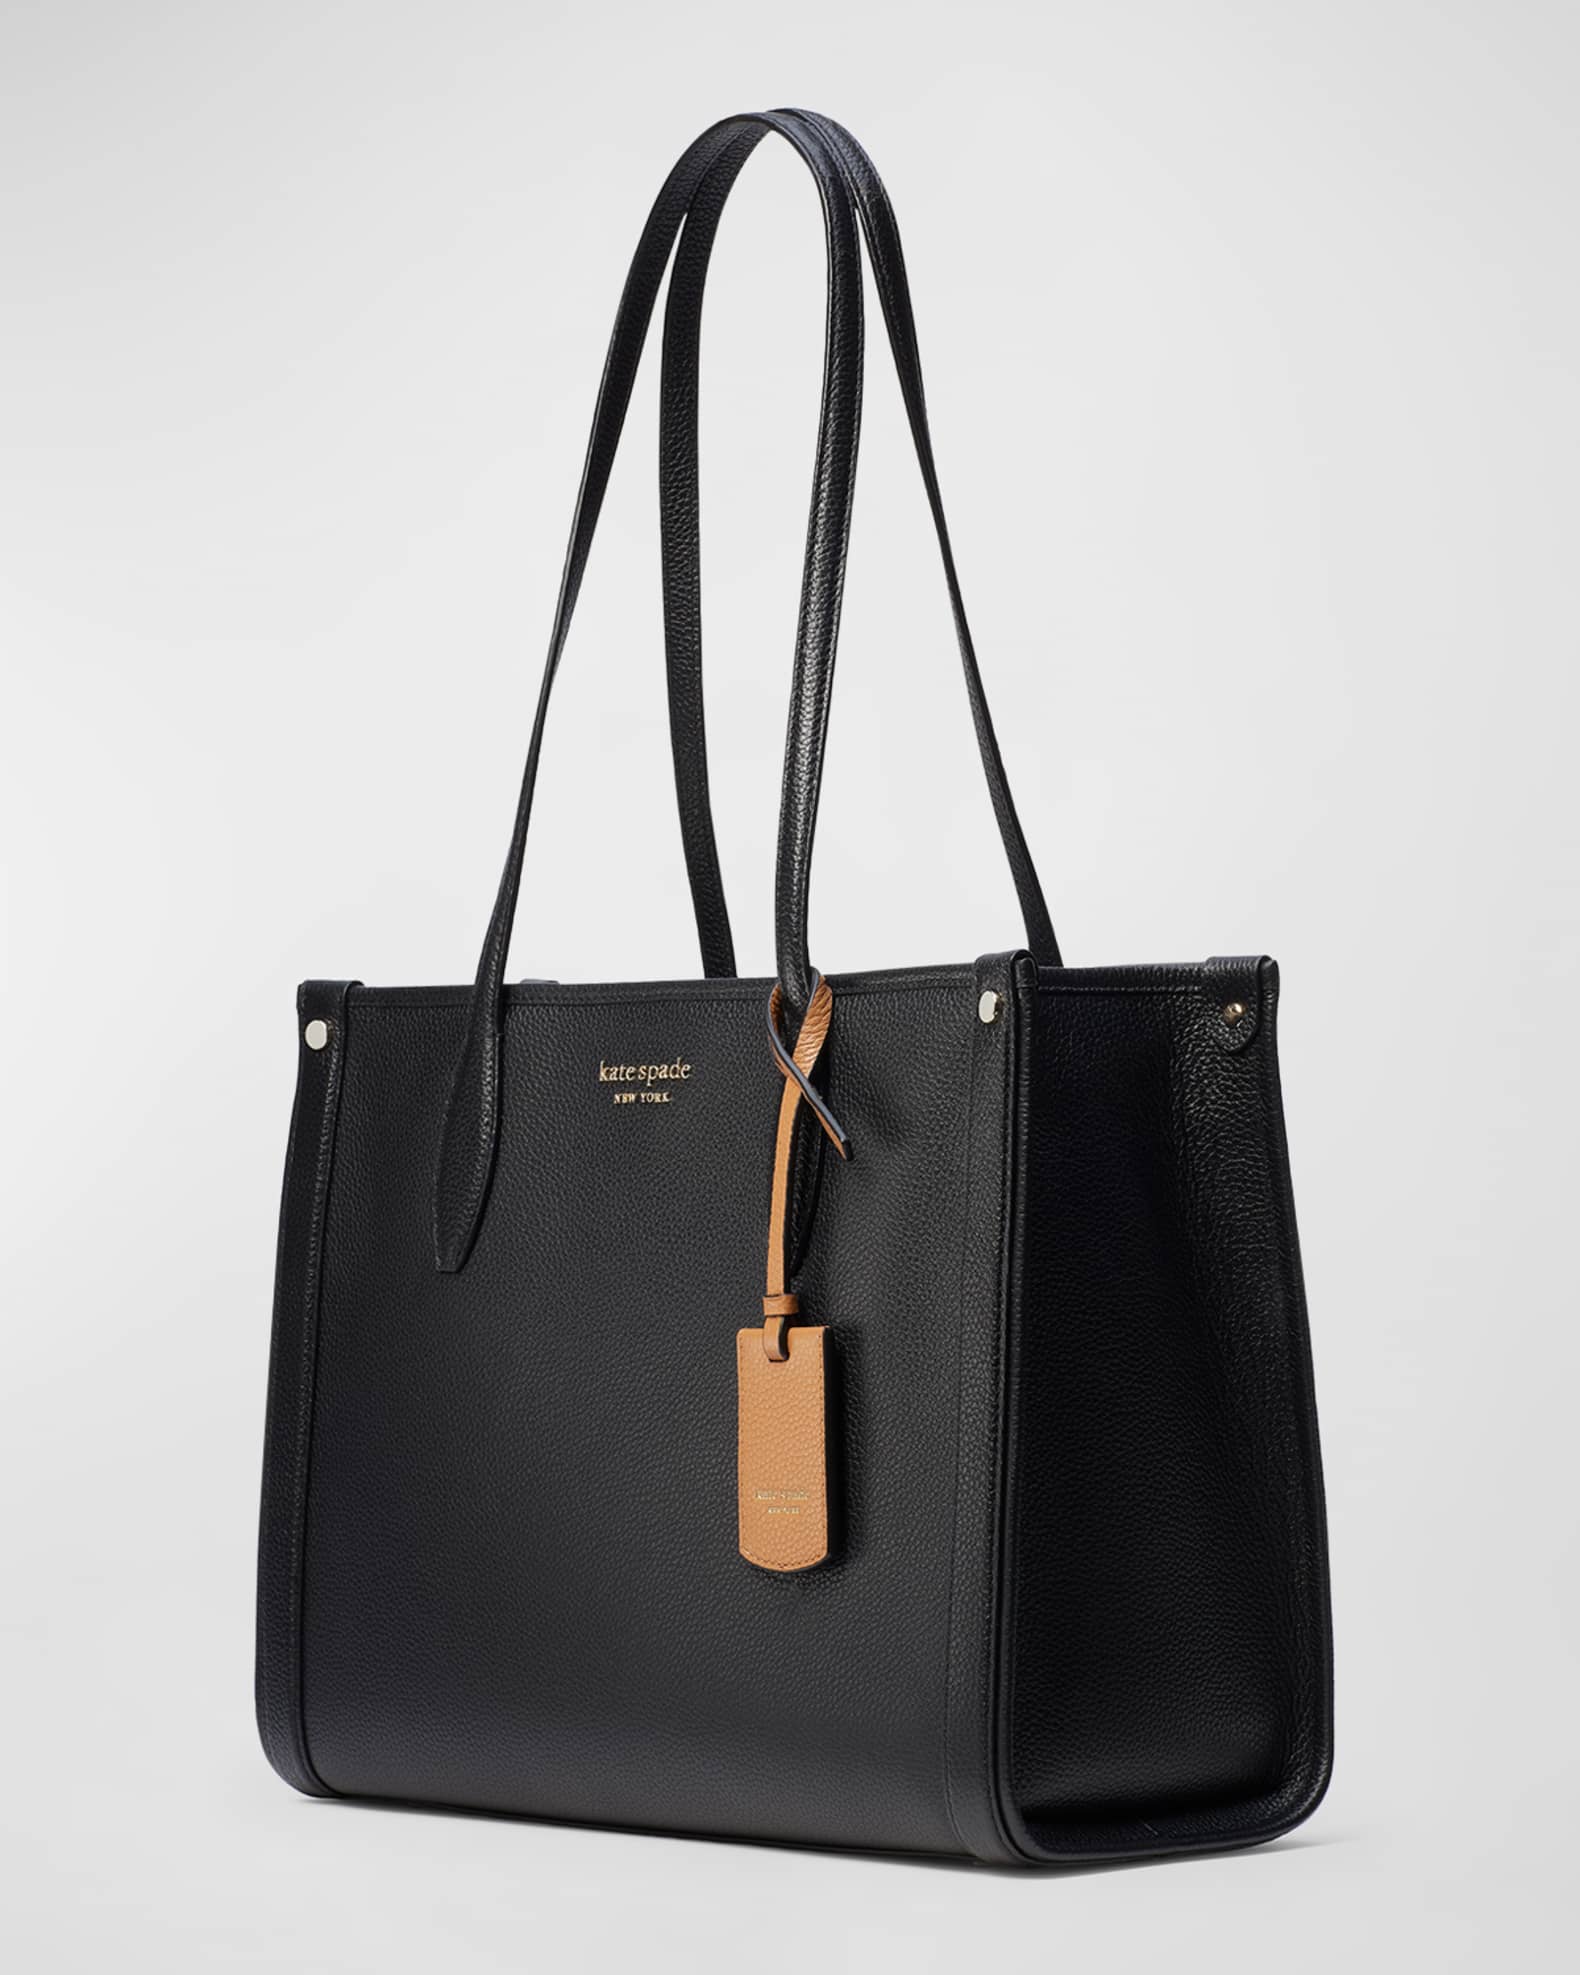 kate spade new york medium calf leather tote bag | Neiman Marcus